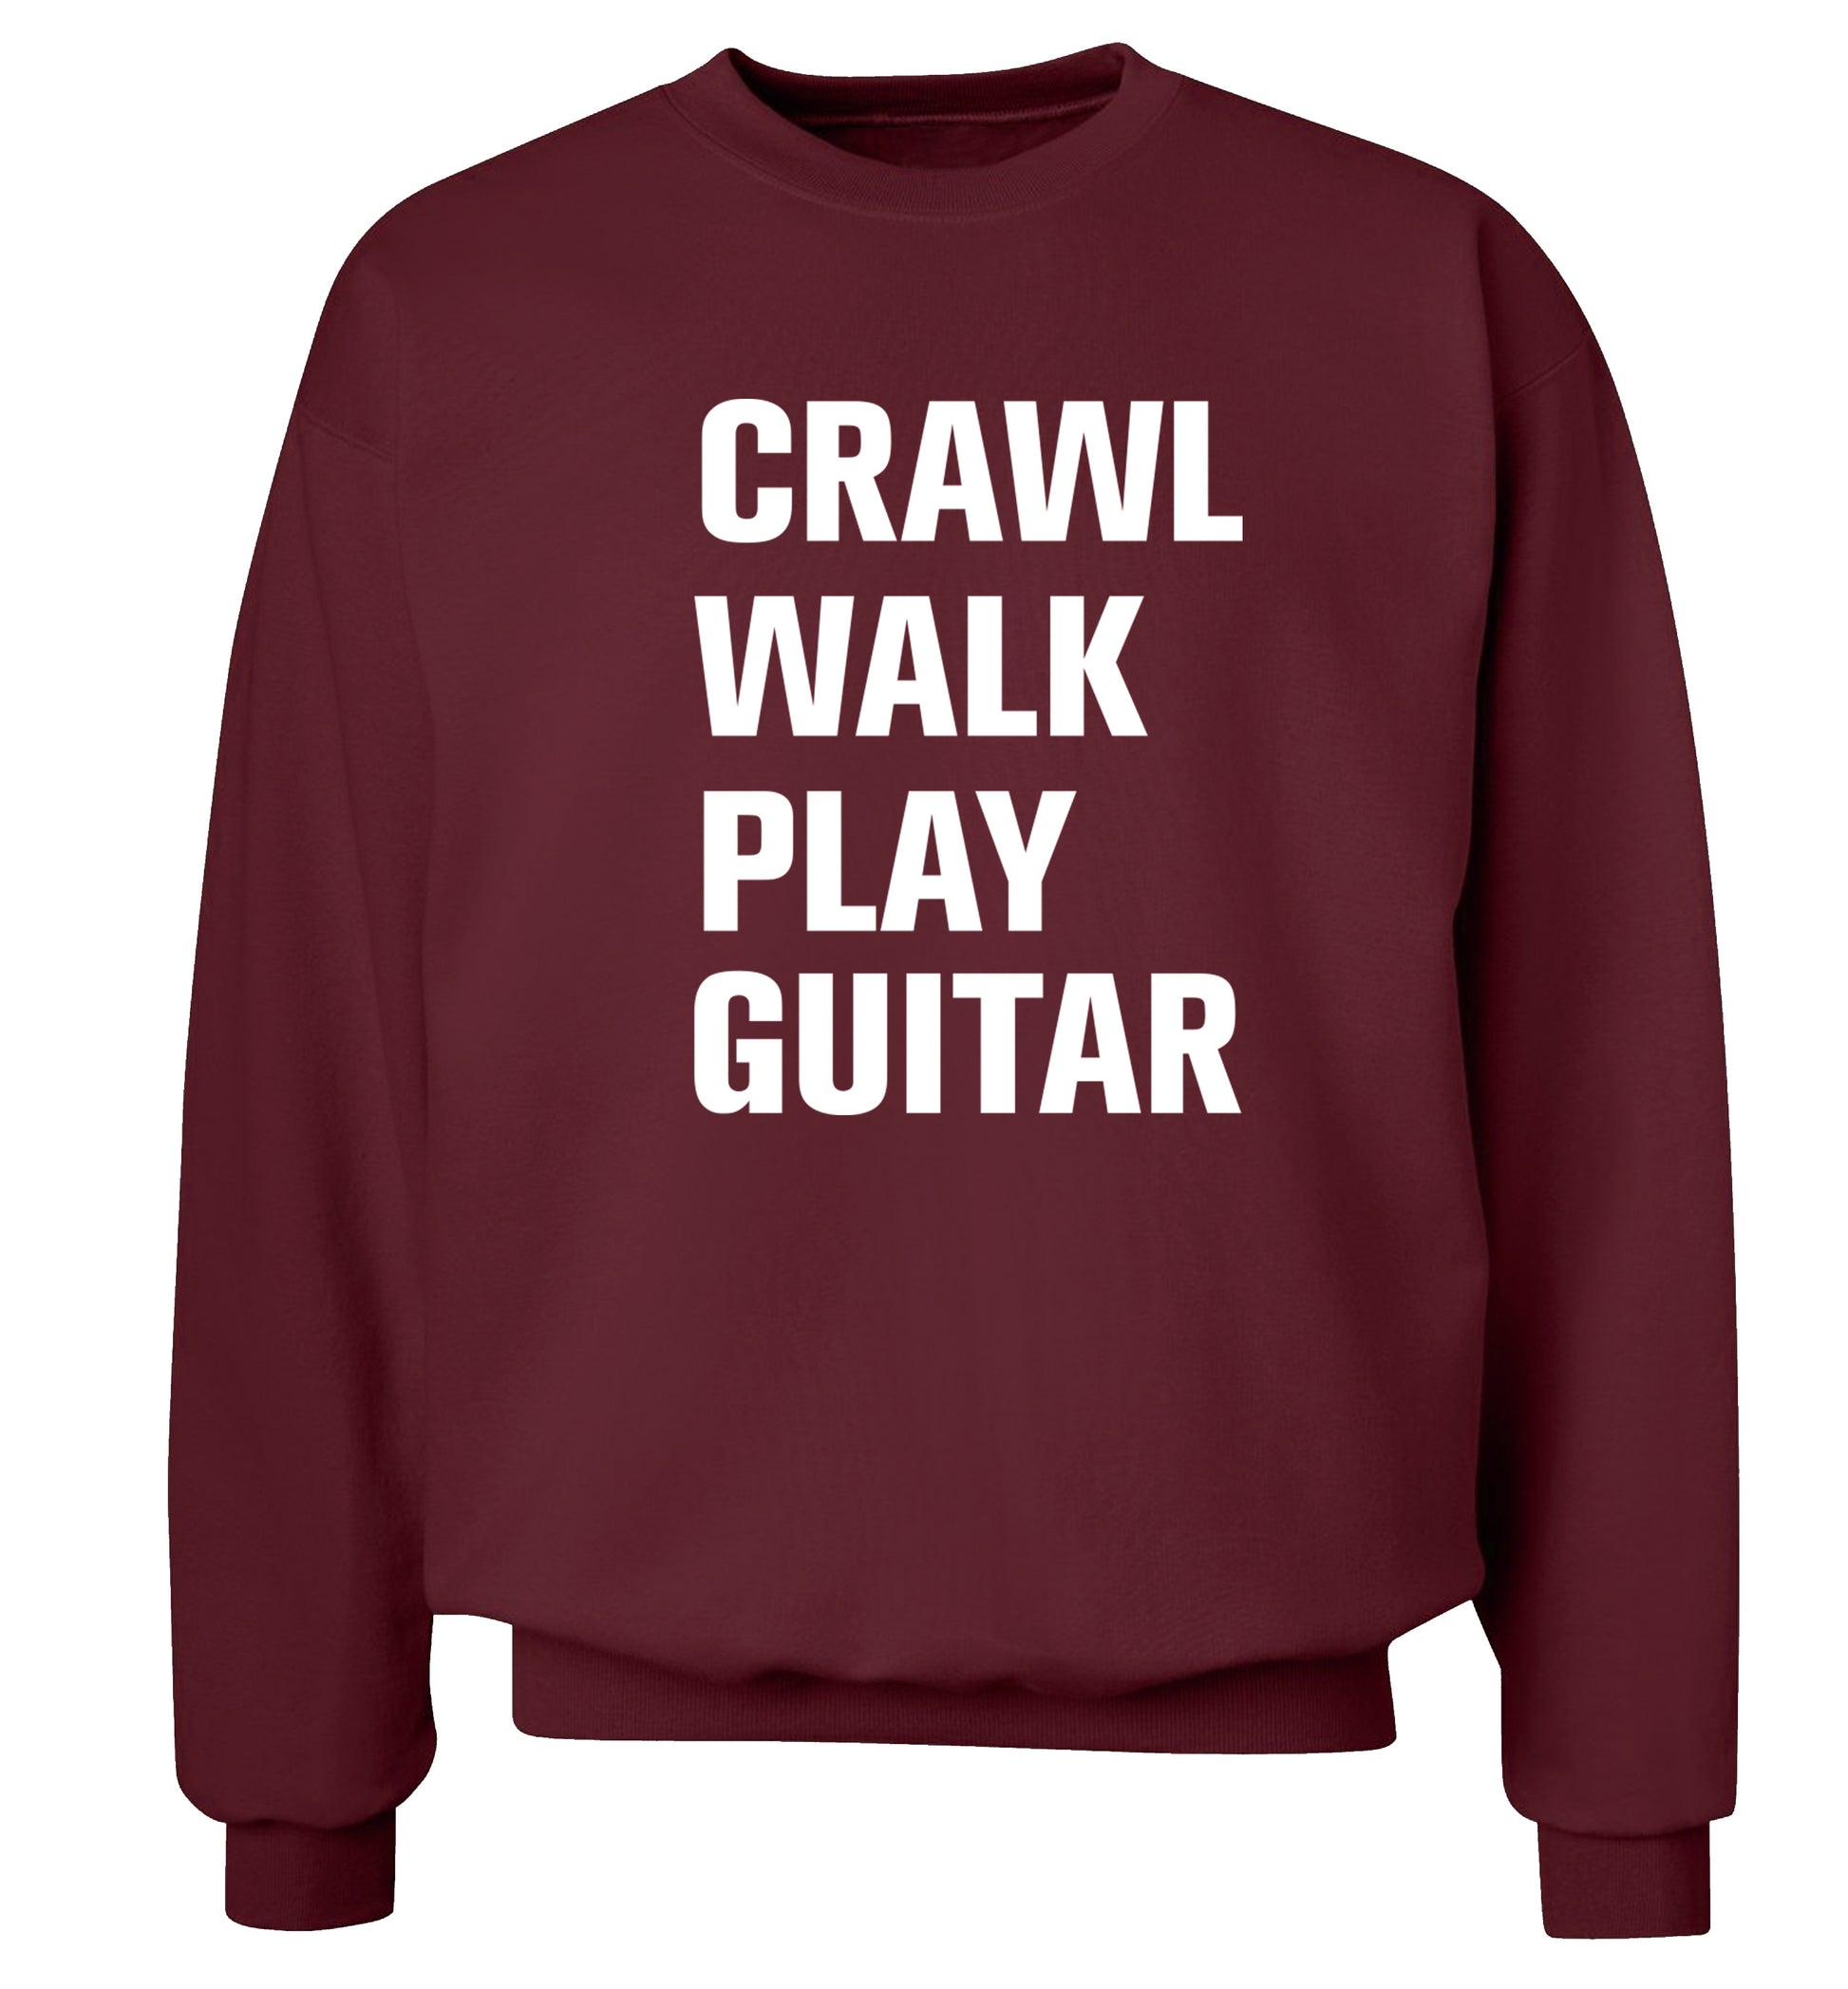 Crawl walk play guitar Adult's unisex maroon Sweater 2XL